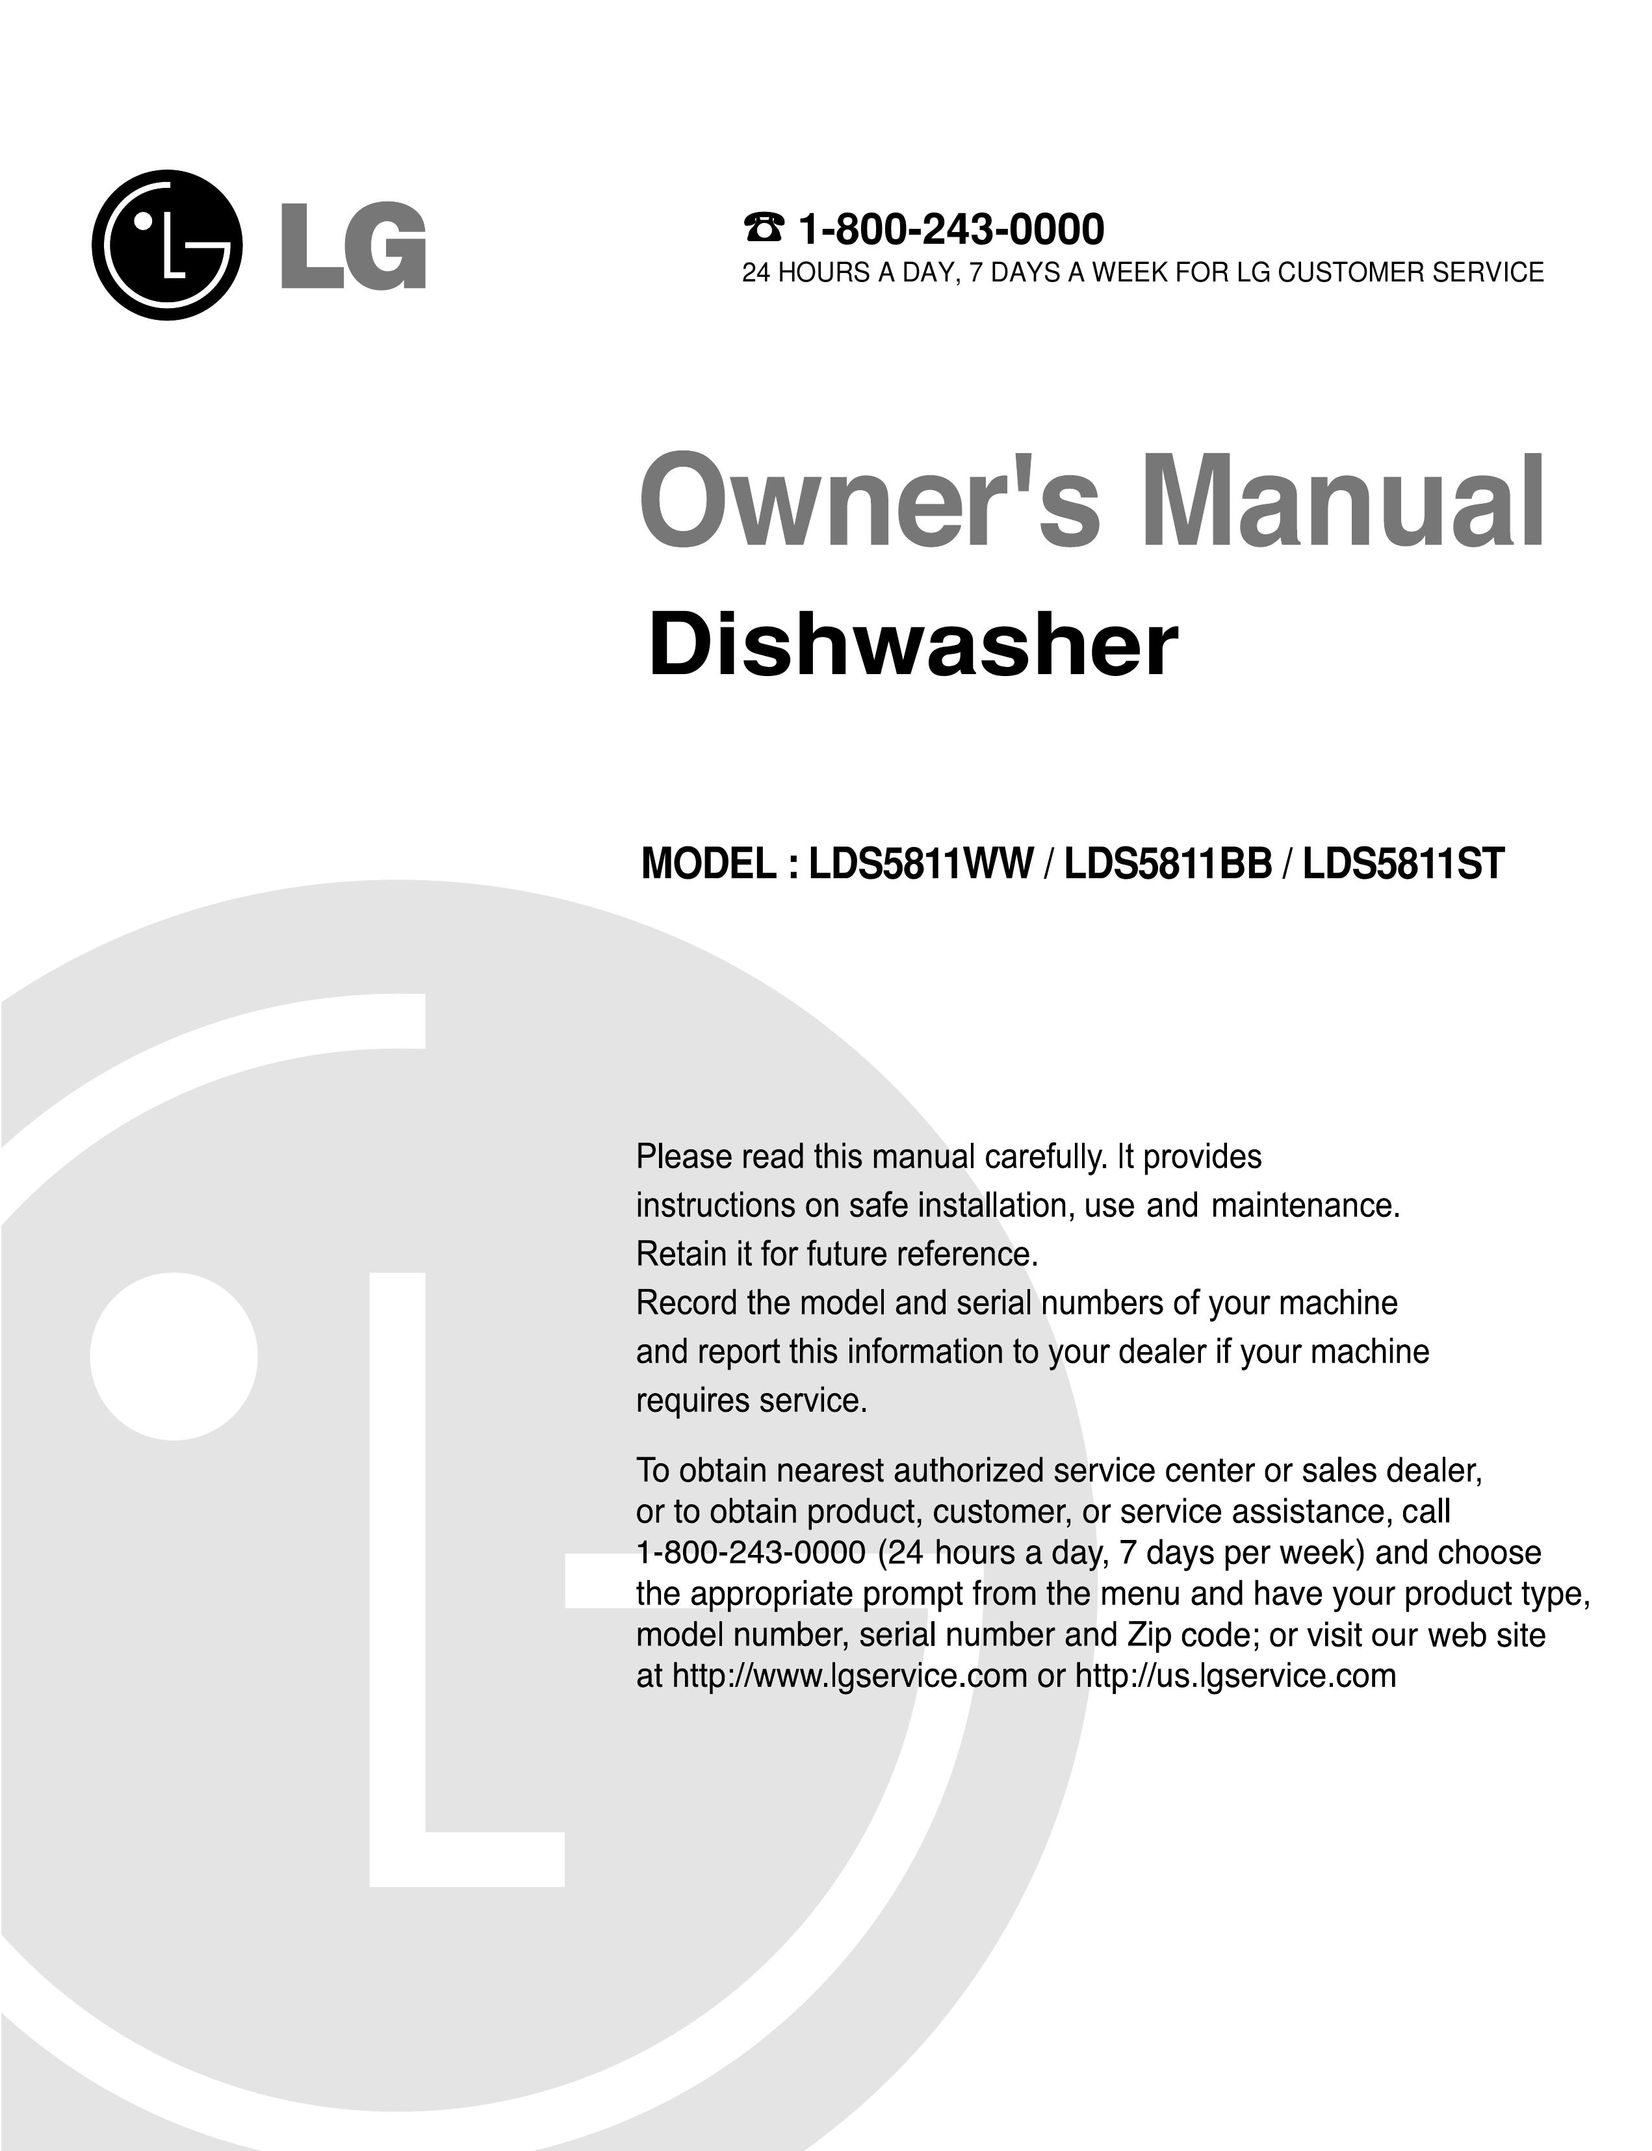 LG Electronics LDS5811ST Dishwasher User Manual